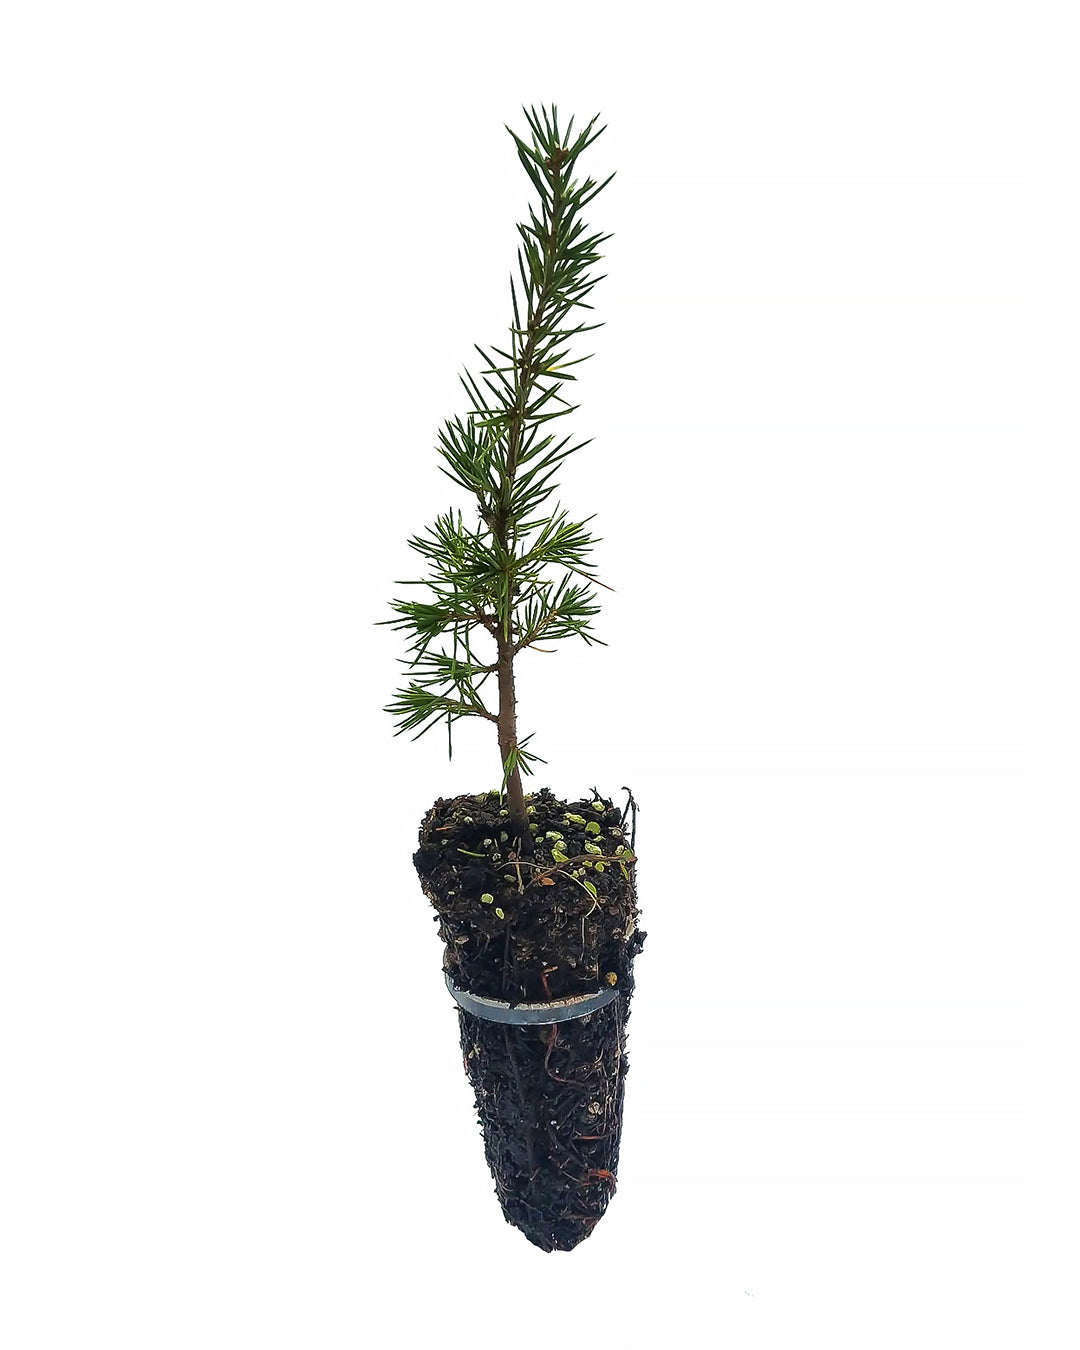 Cedrus Libani - Cedar of Lebanon (Forestry Alveolo)